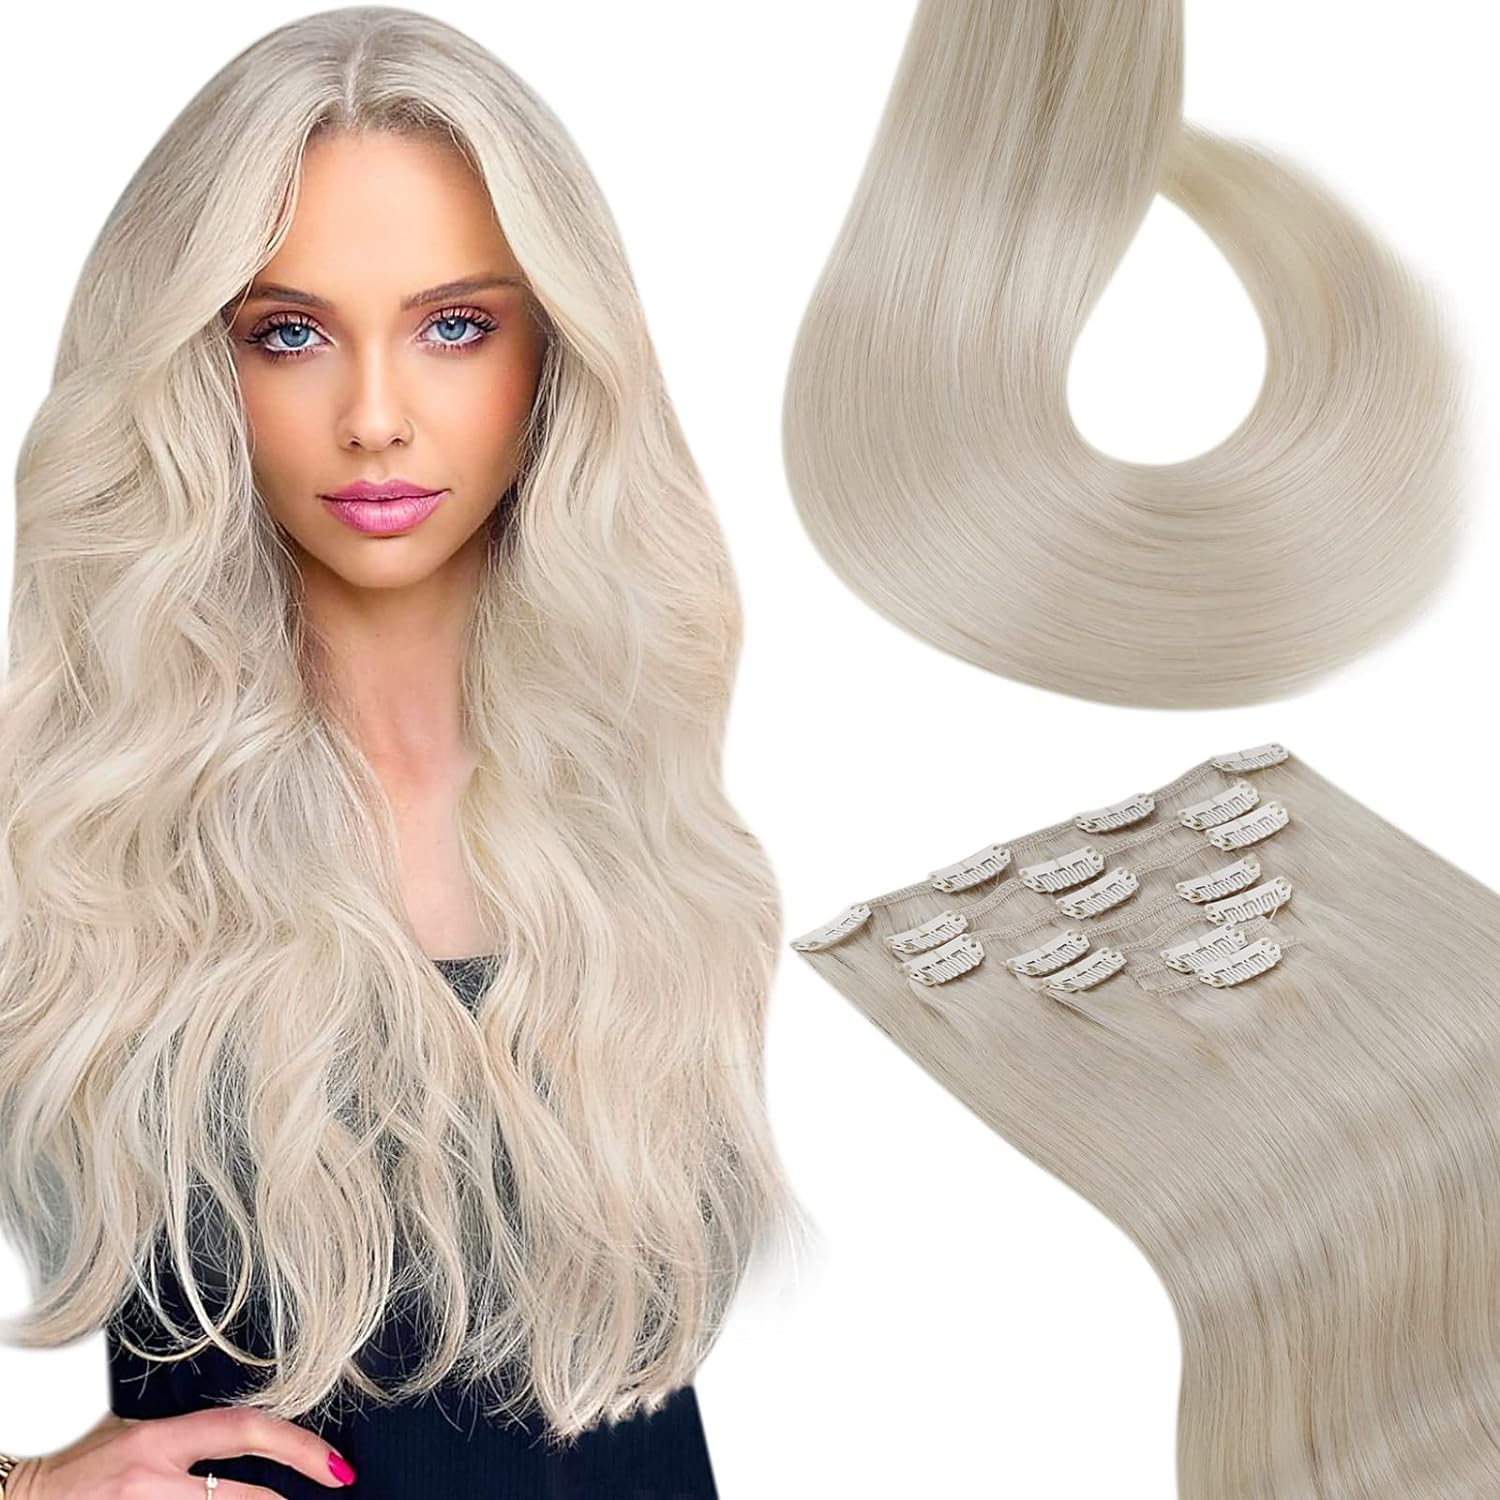 LaaVoo Platinum Blonde Hair Extensions Clip in Human Hair 18 inch White Blonde 7